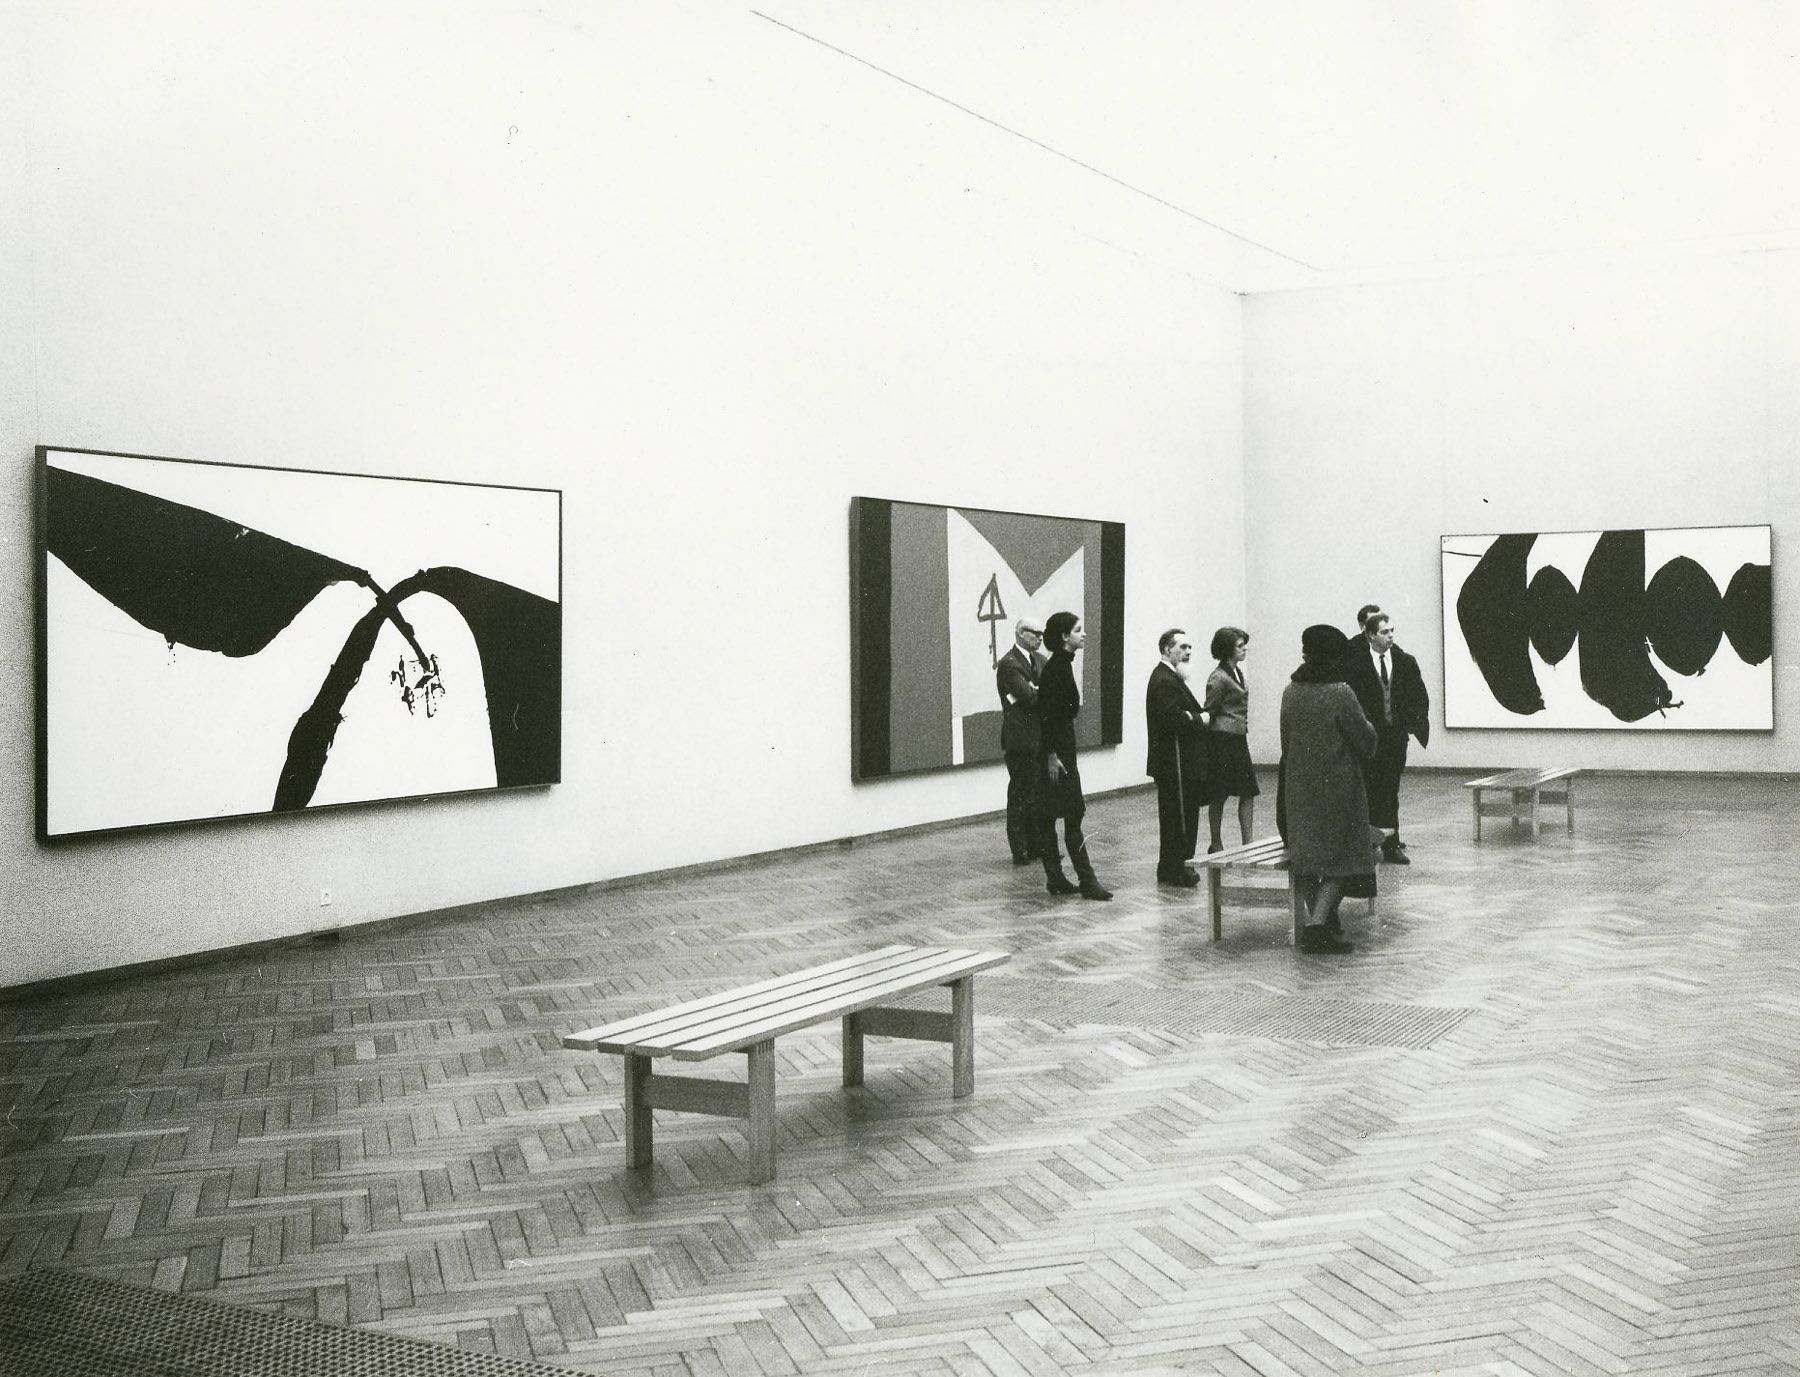 Motherwell’s 1965 retrospective installed at the Stedelijk Museum